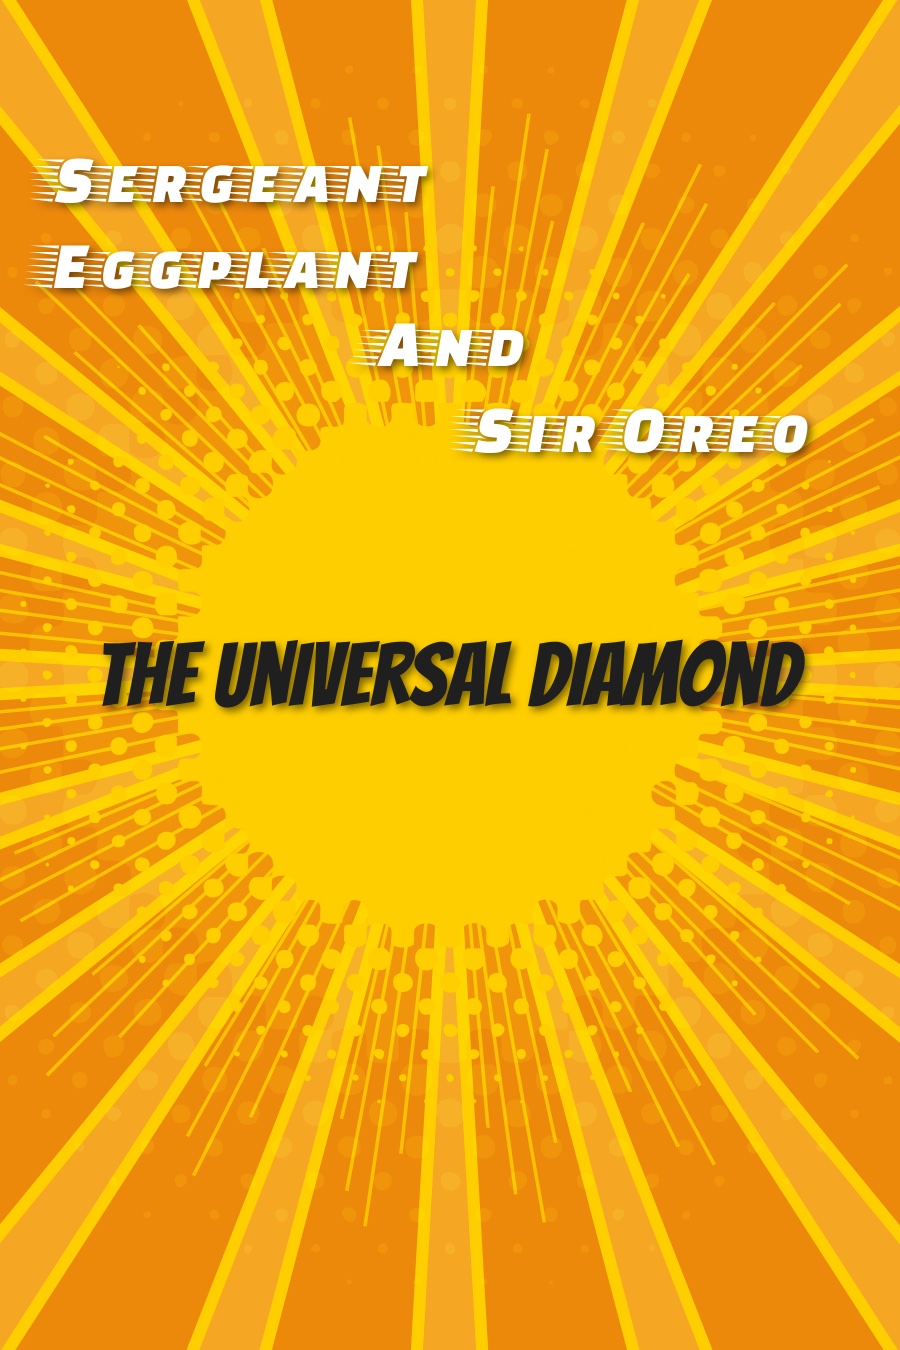 Sergeant Eggplant and Sir Oreo The Universal Diamond by Elliot T